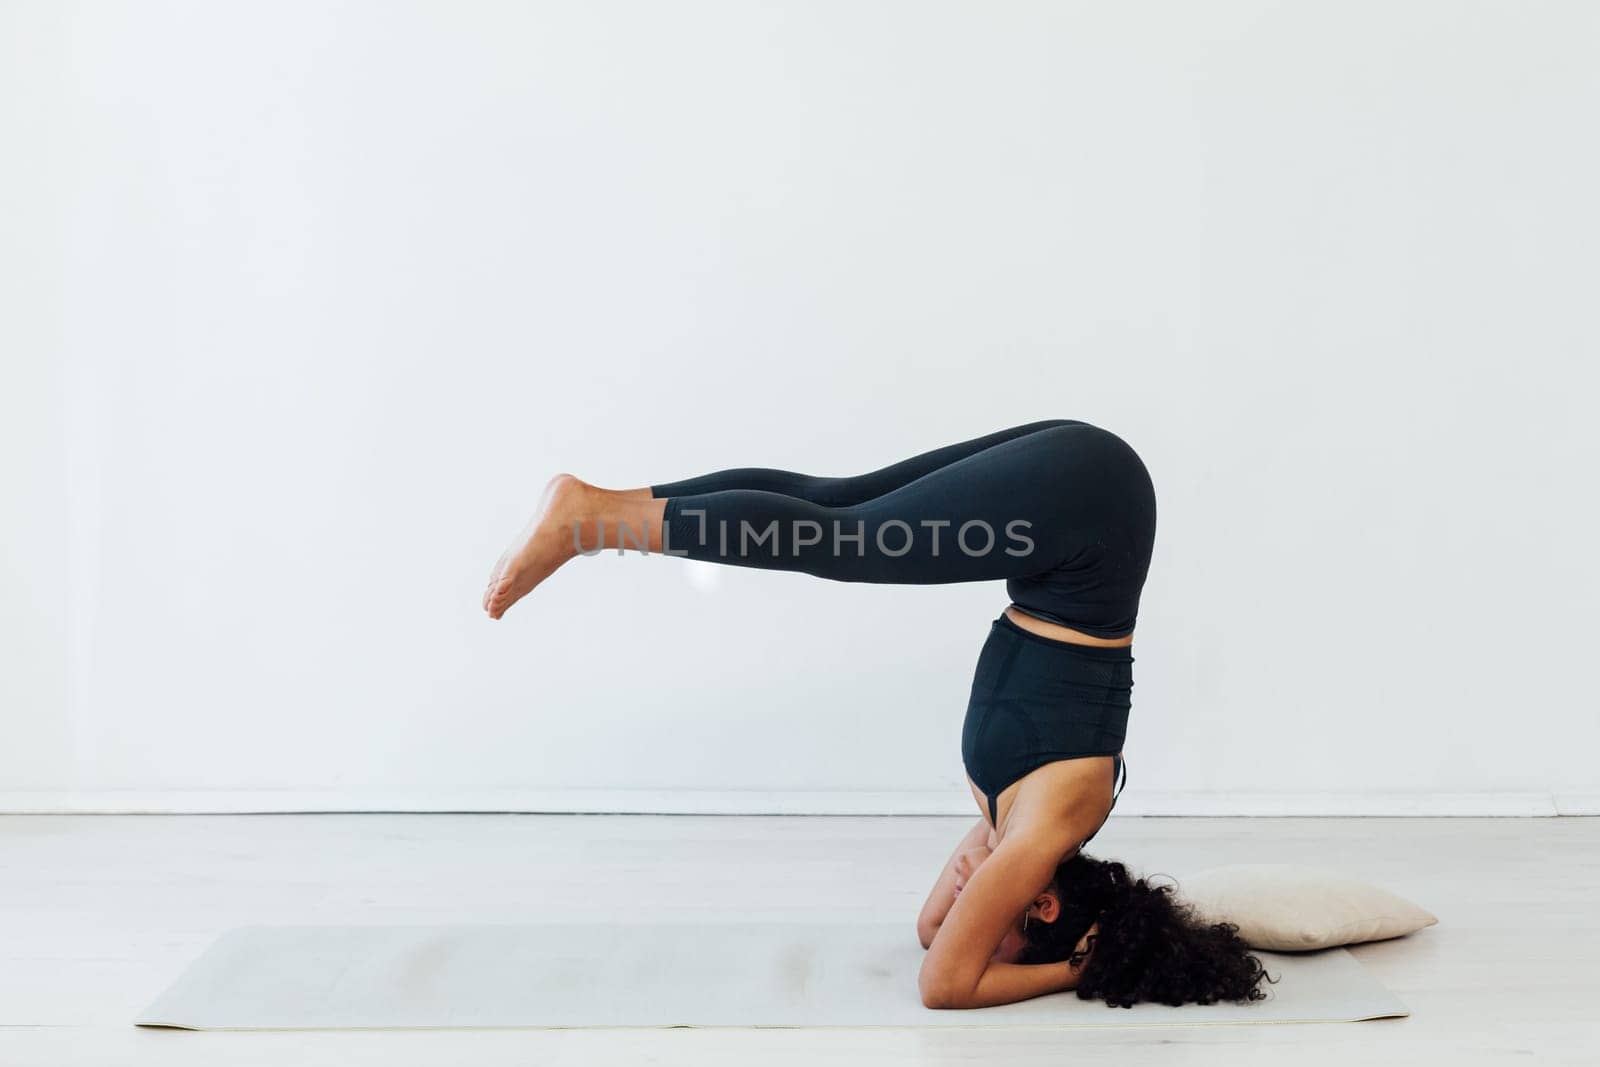 woman doing exercises yoga asana pose workout in the studio